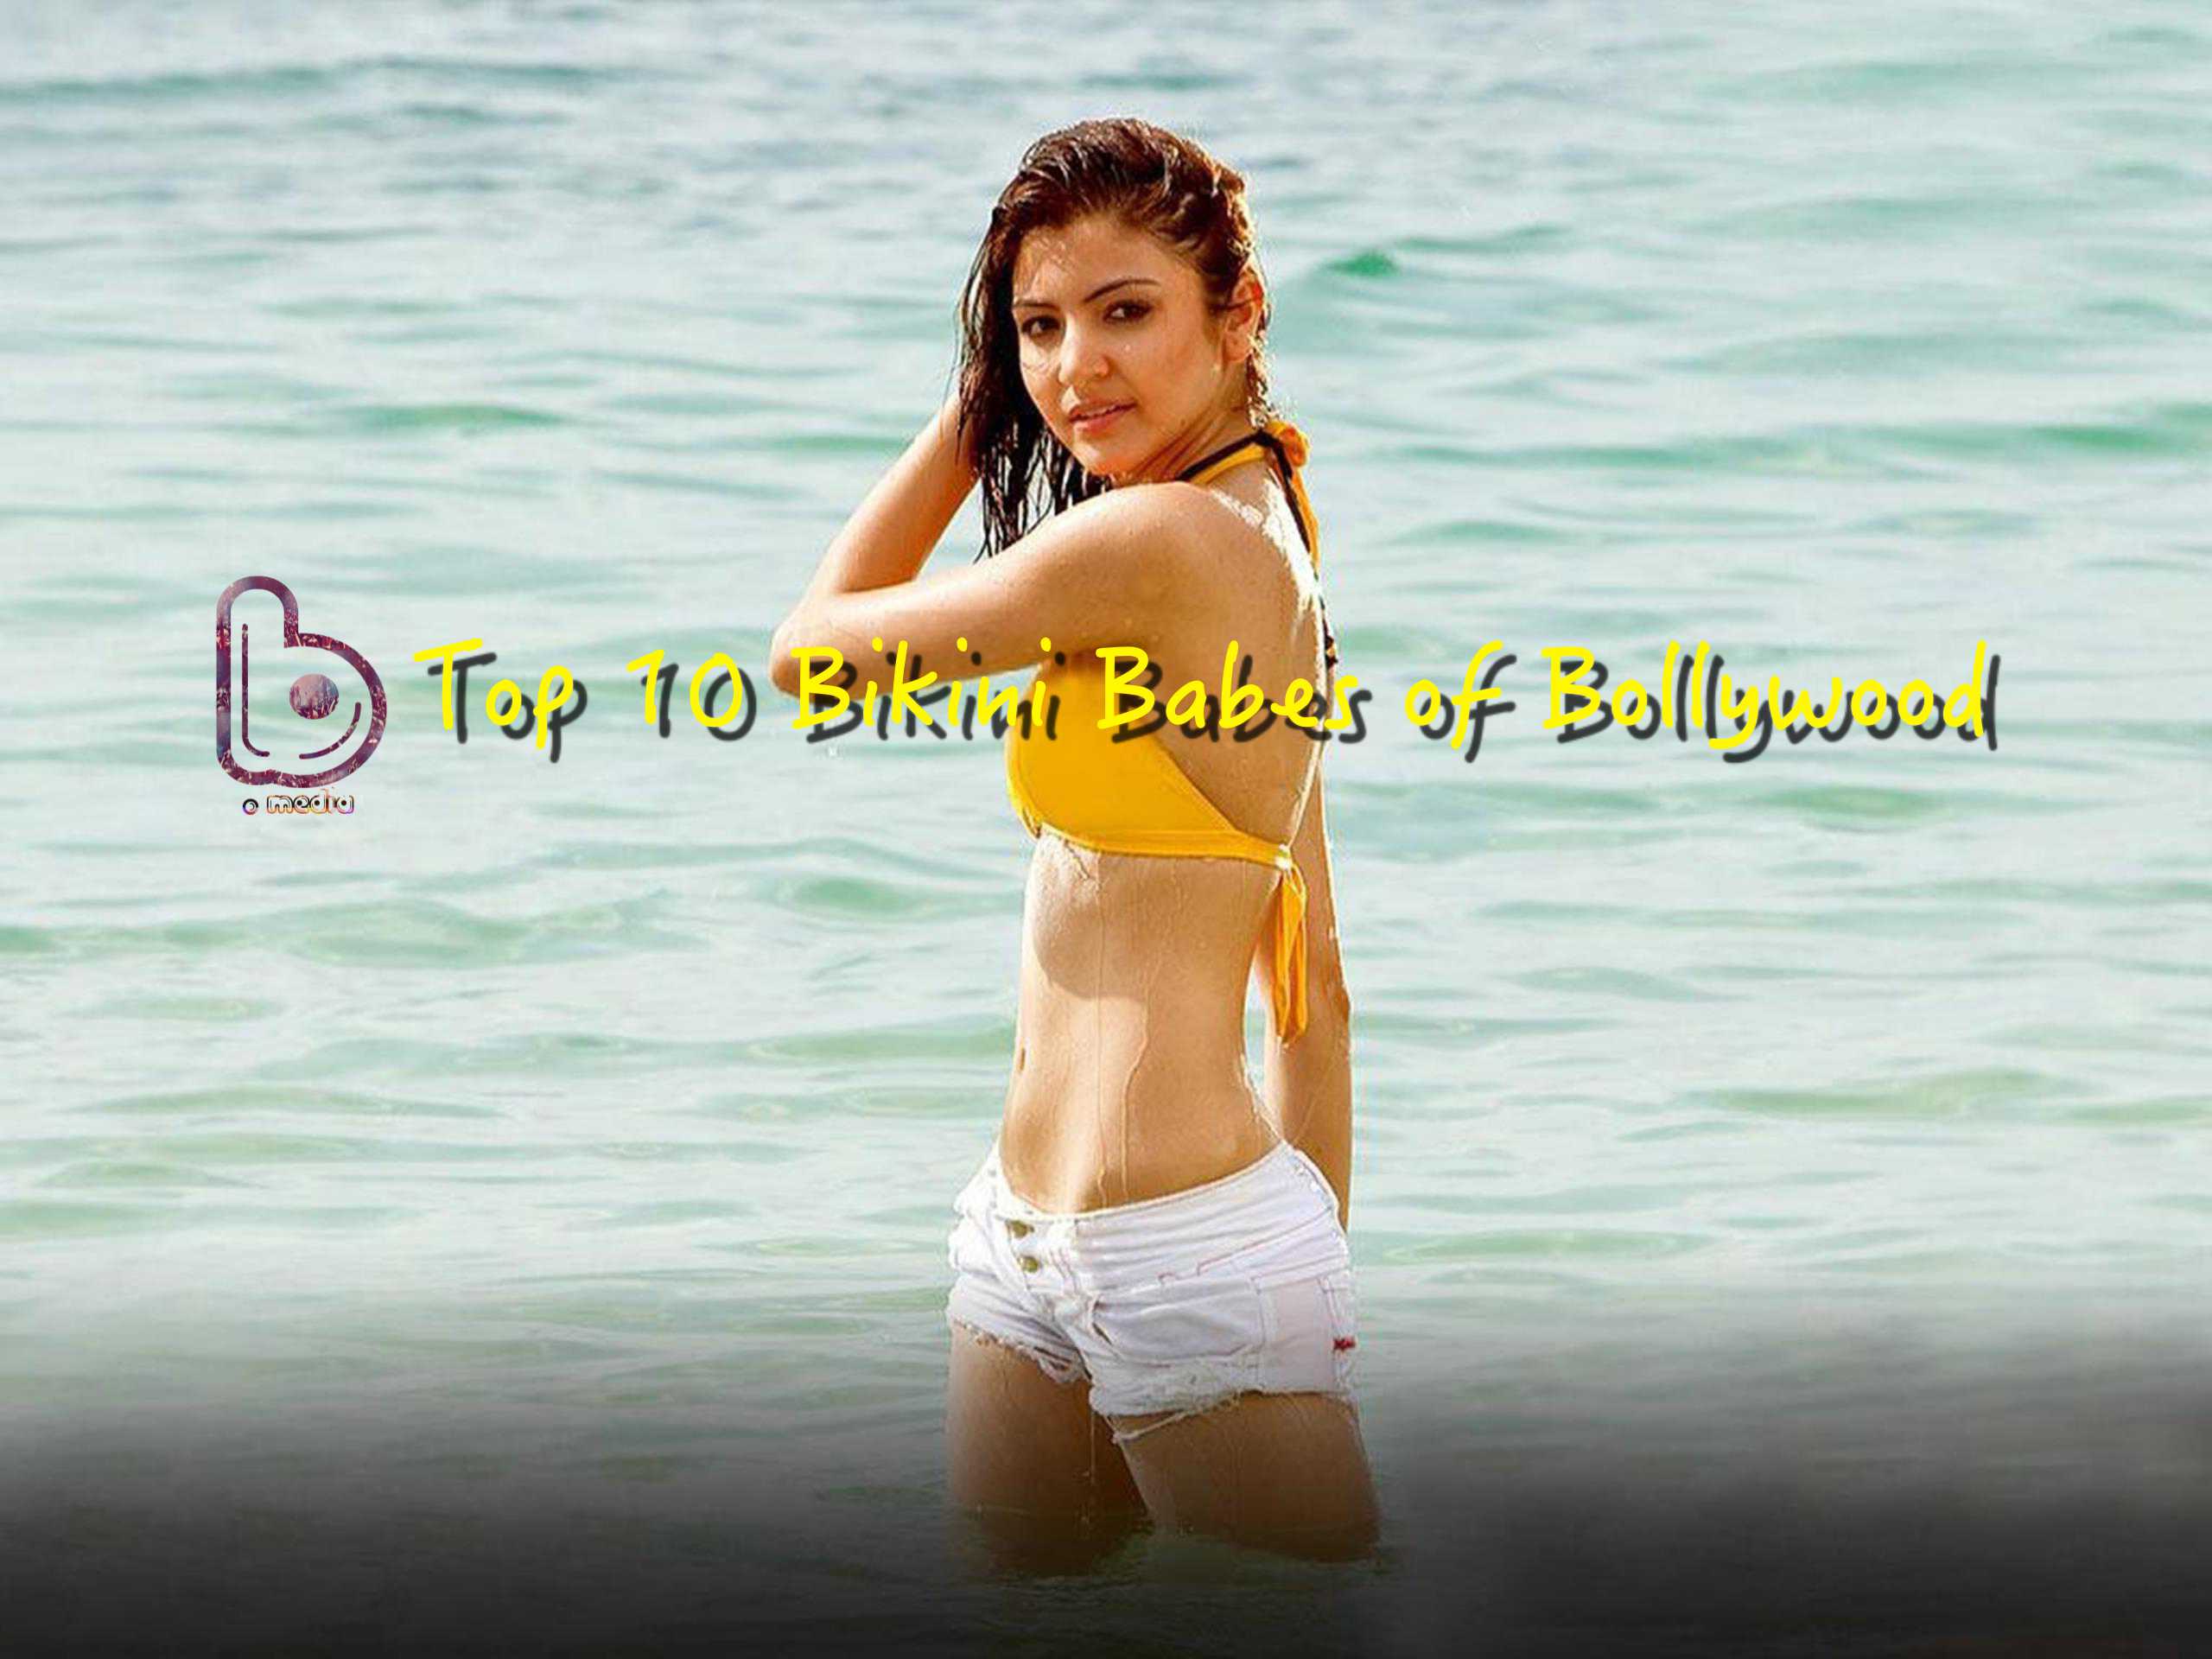 Top 10 Bikini Babes of Bollywood - Anushka Sharma